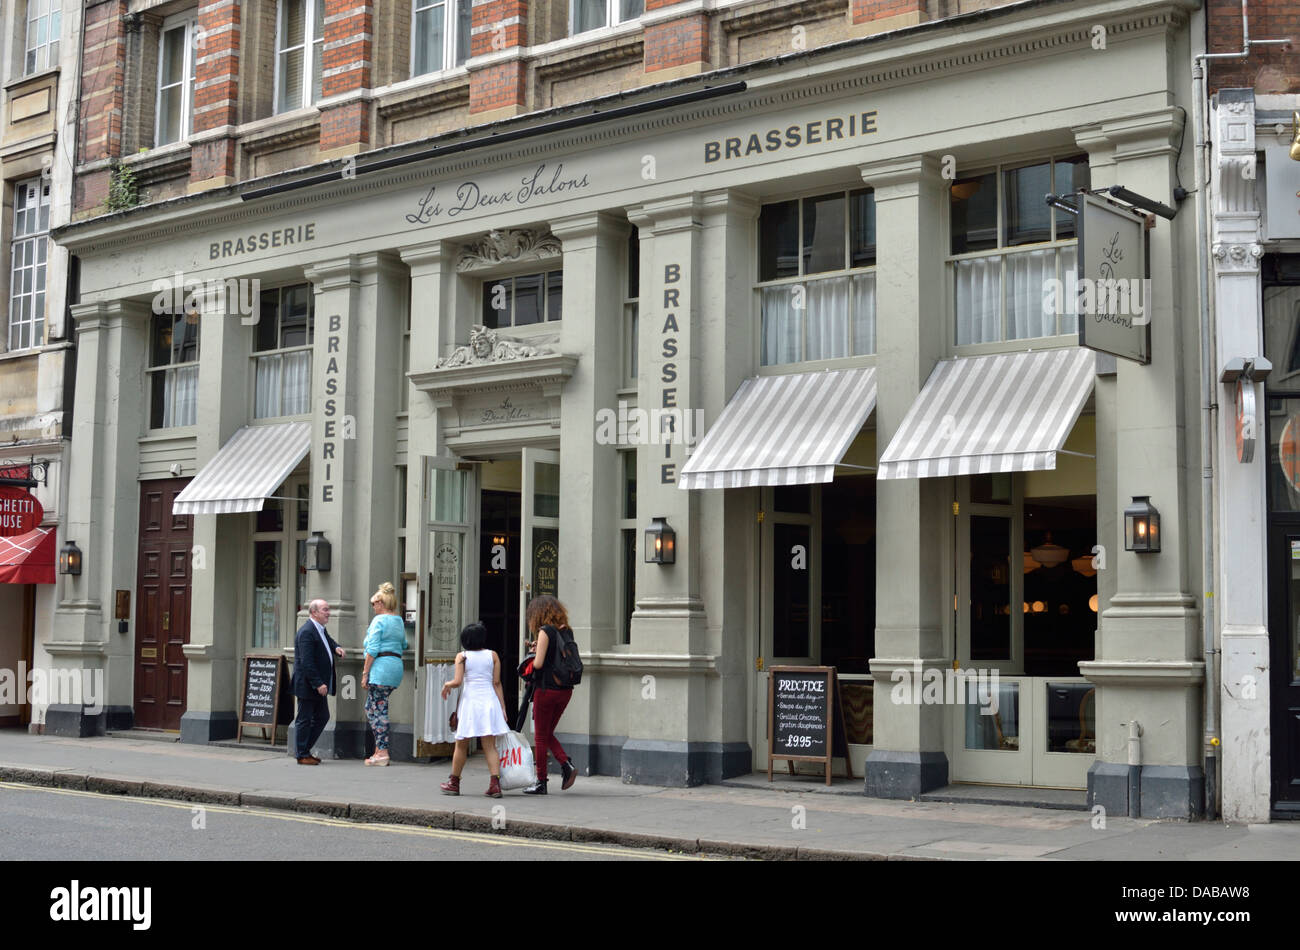 Les Deux Salons brasserie restaurant in William IV Street, Covent Garden, London, UK. Stock Photo